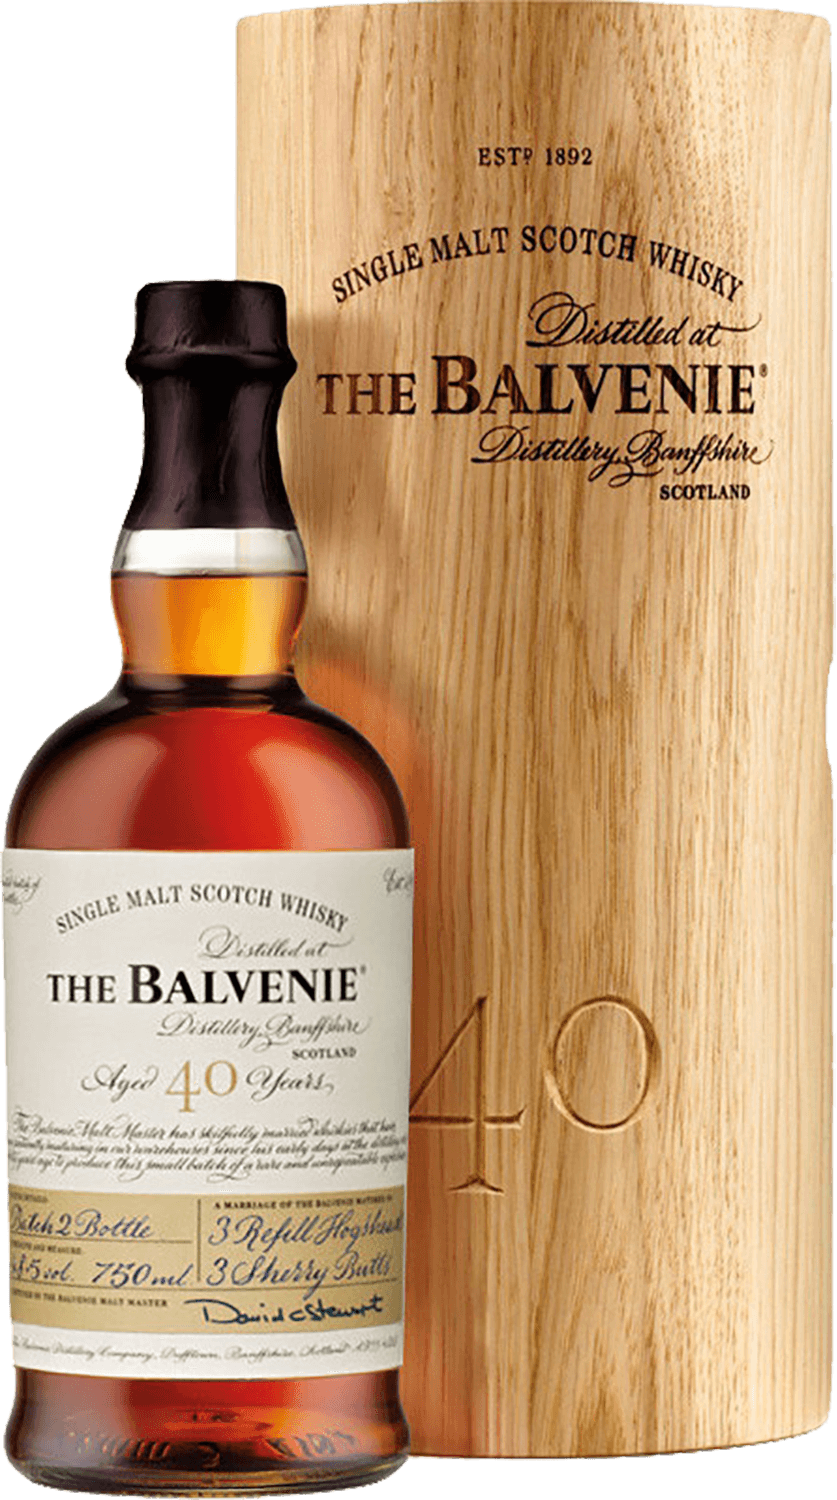 The Balvenie 40 y.o. Single Malt Scotch Whisky (gift box)